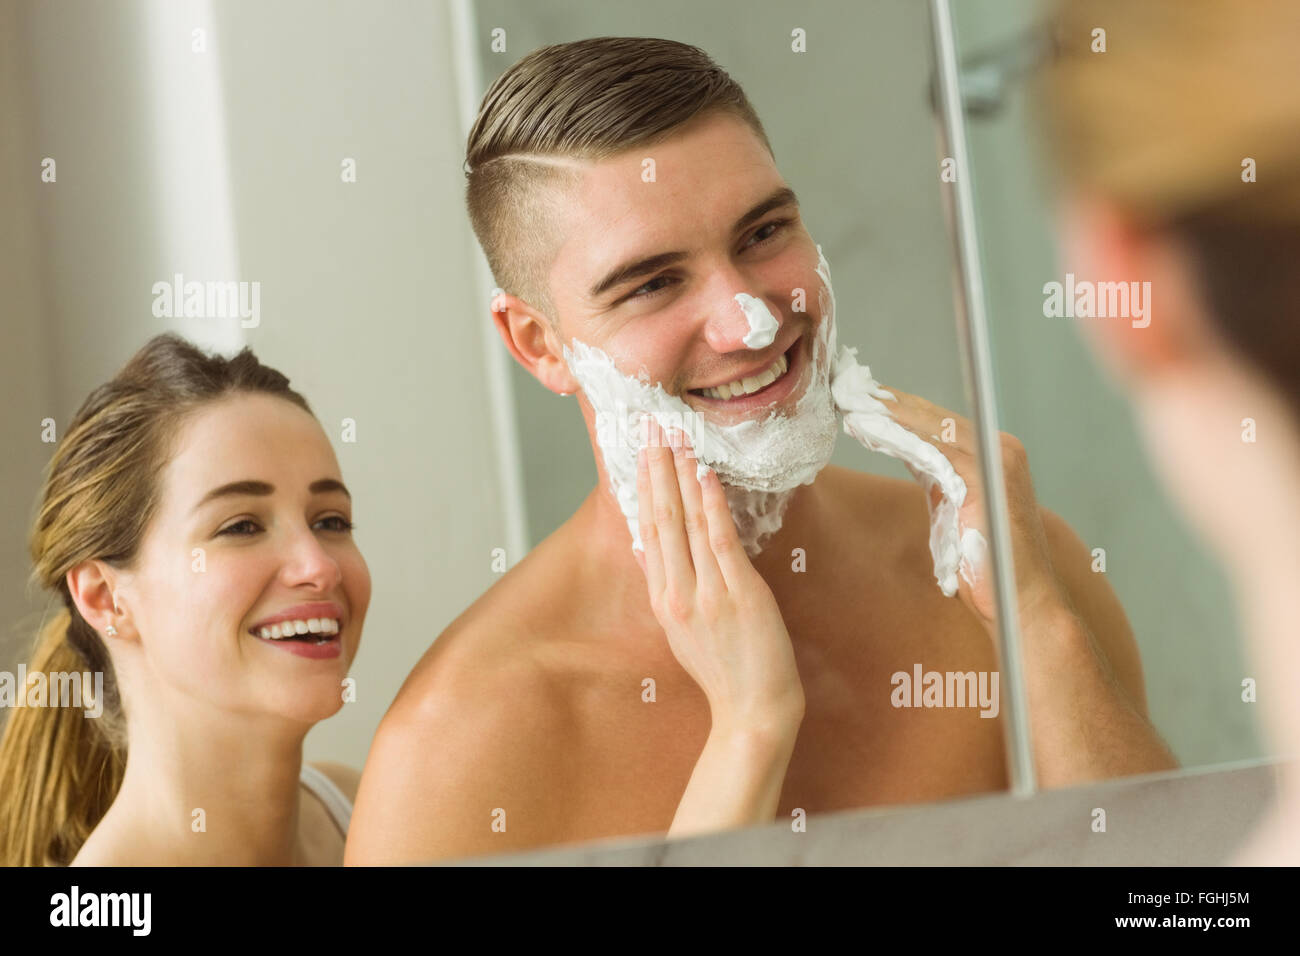 Брею мужу видео. Девушка в пене для бритья. Ванна с пенкой для бритья. Девушка в пене бреется. Девушки в пеной для бритья.